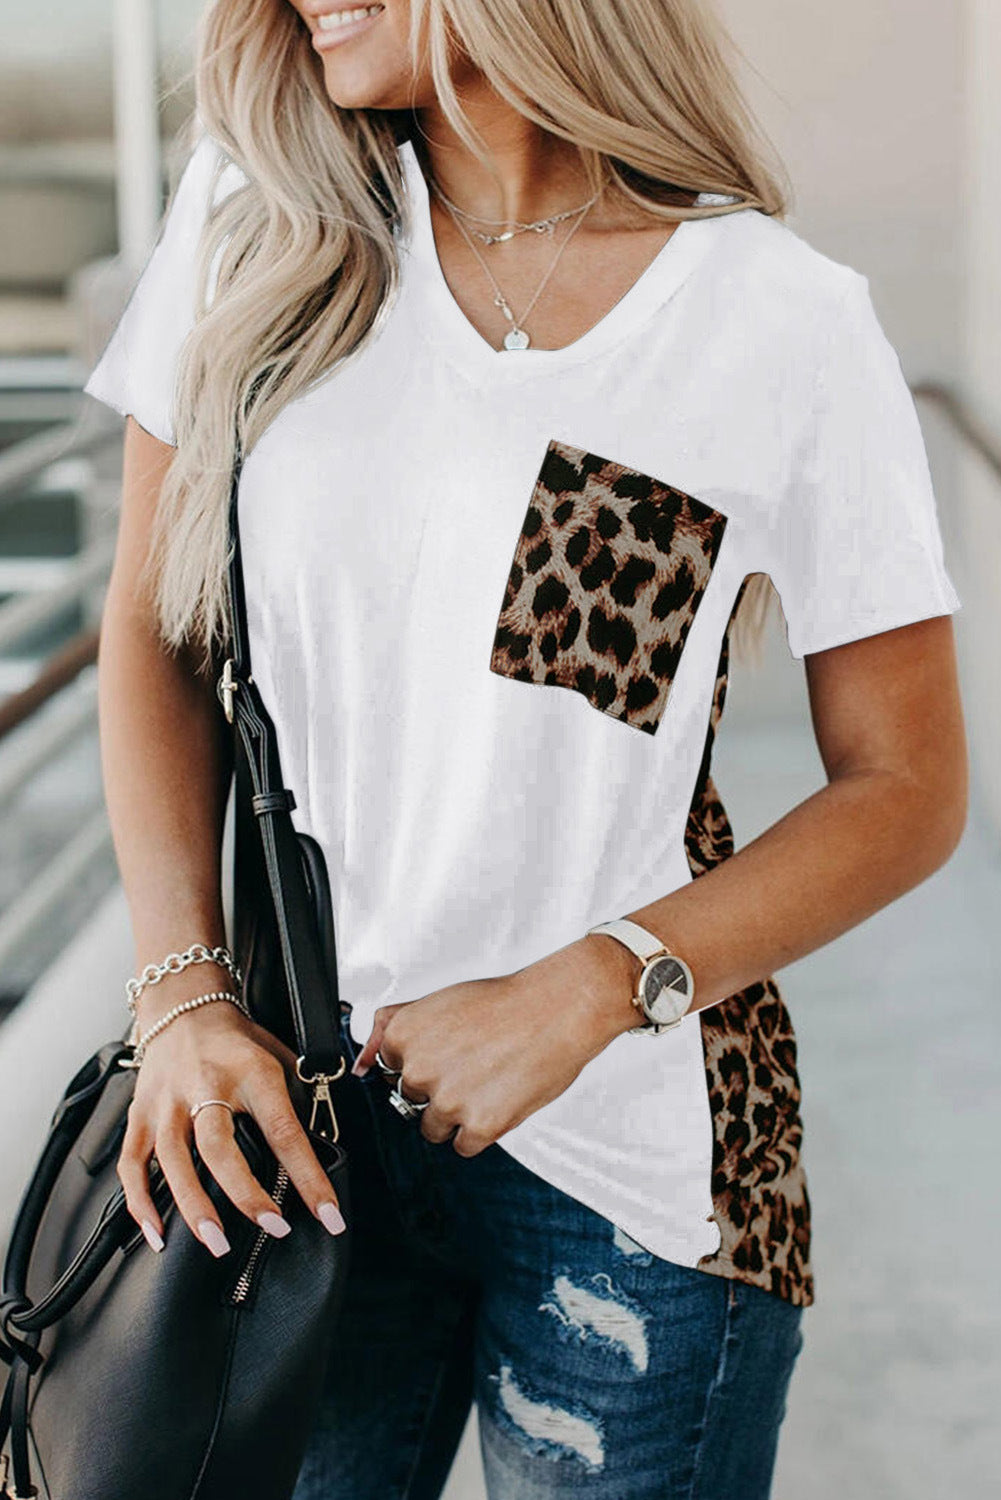 Women's Loose Plus Size Leopard Print Women's Short Sleeve Long Sleeve T-Shirt Shirt